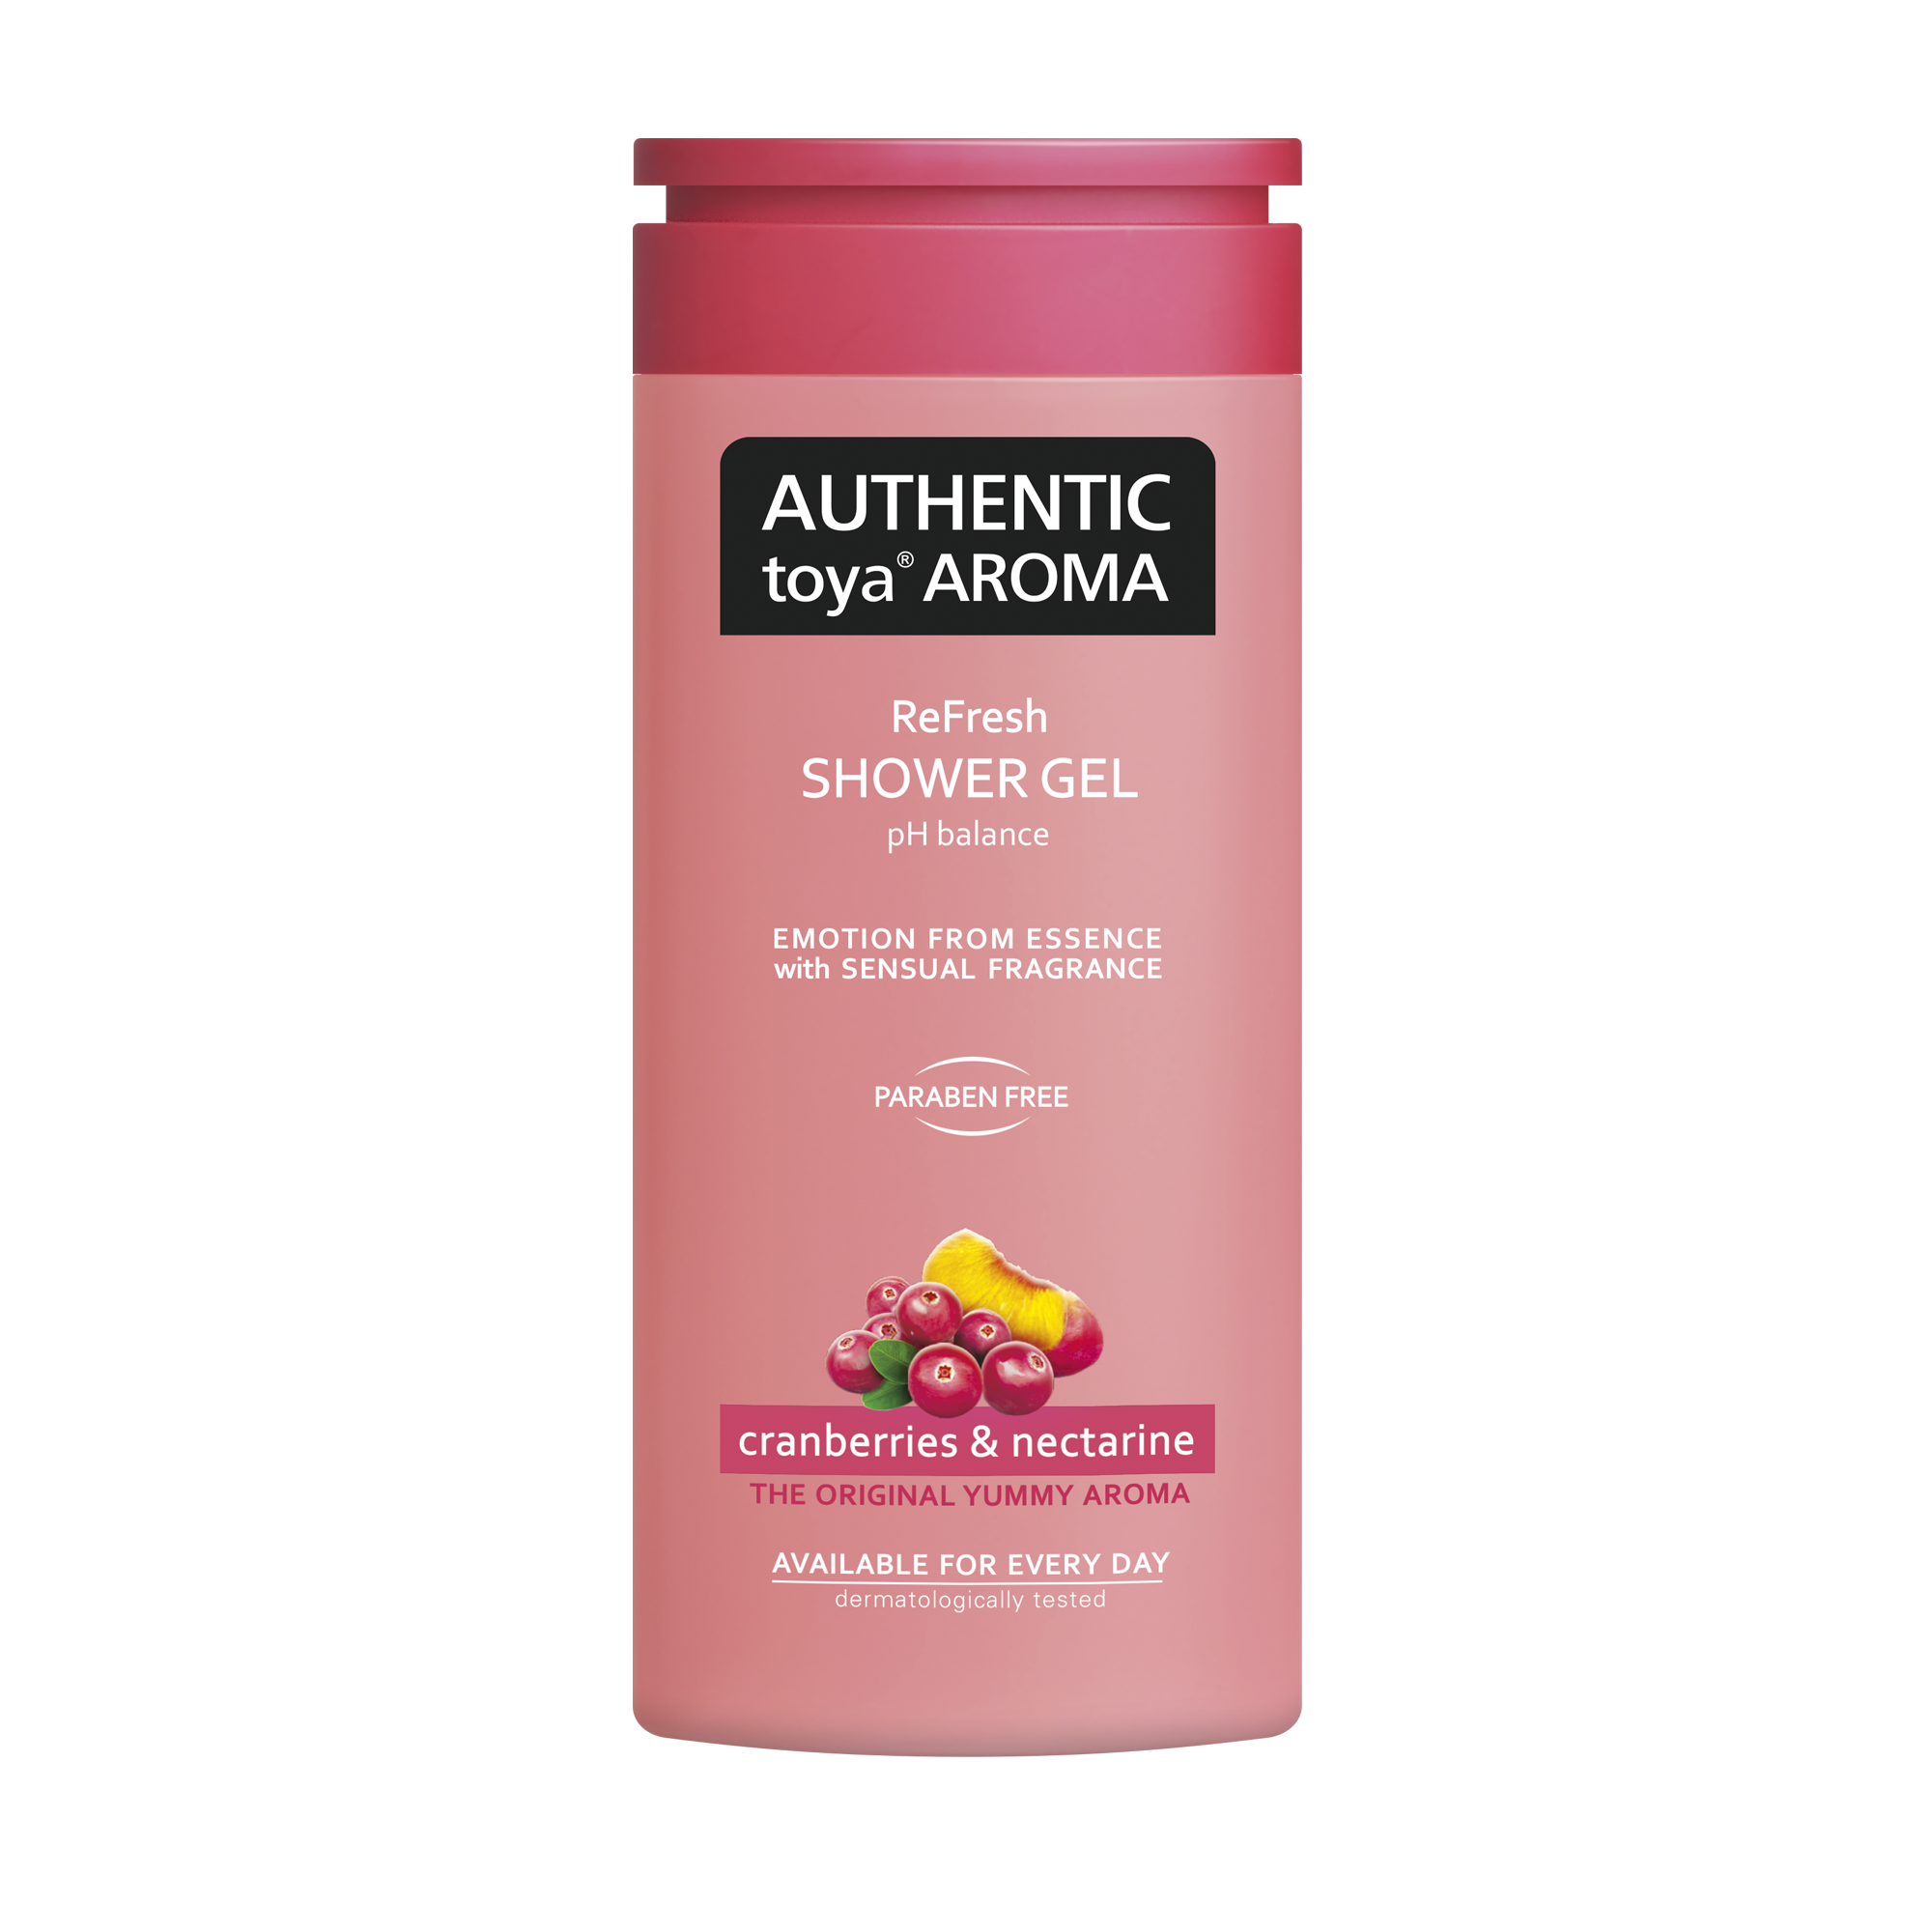 AUTHENTIC toya AROMA cranberries & nectarine shower gel